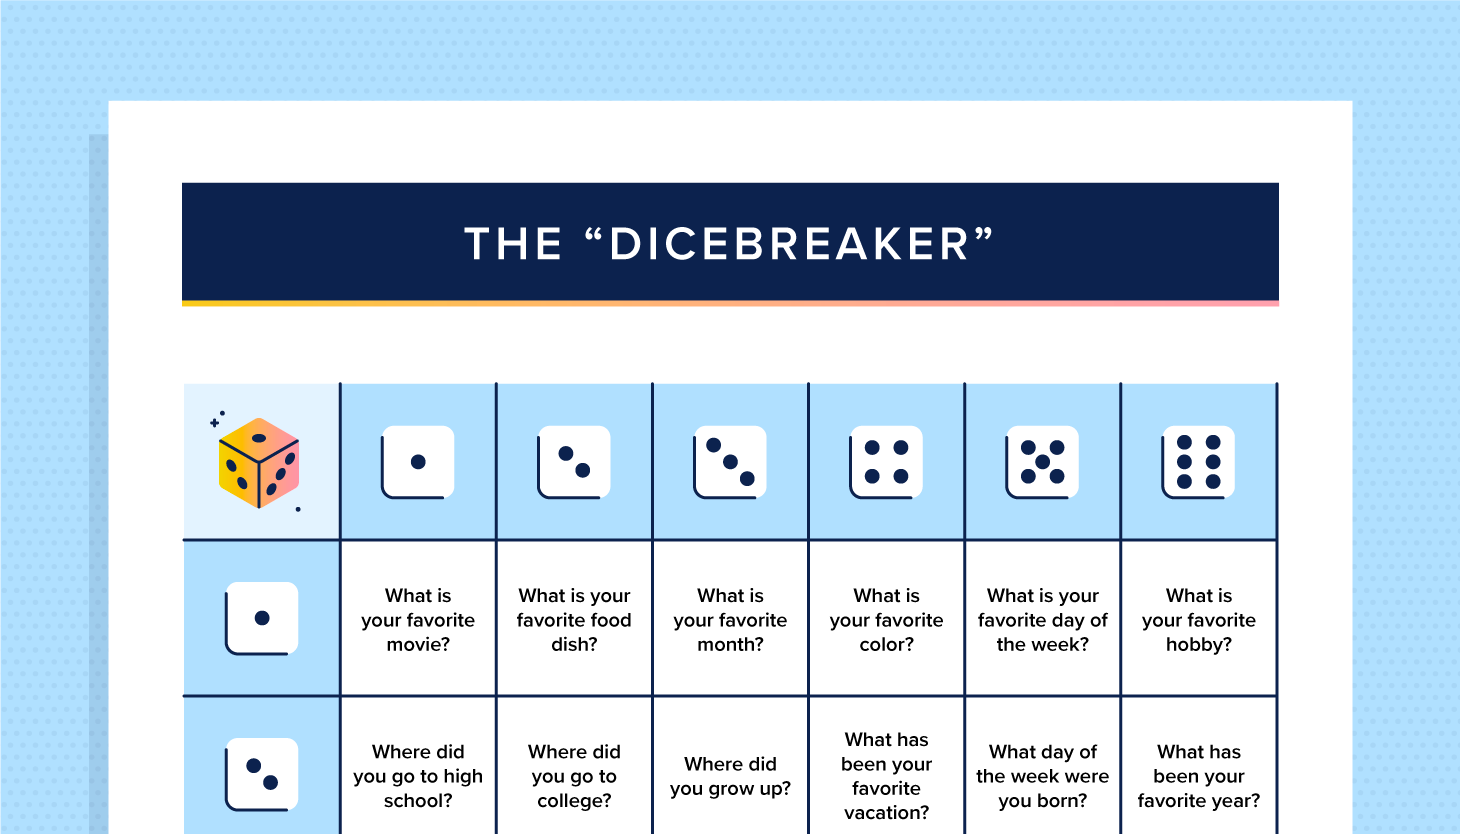 16 Perfect Icebreaker Games for Couples - IcebreakerIdeas